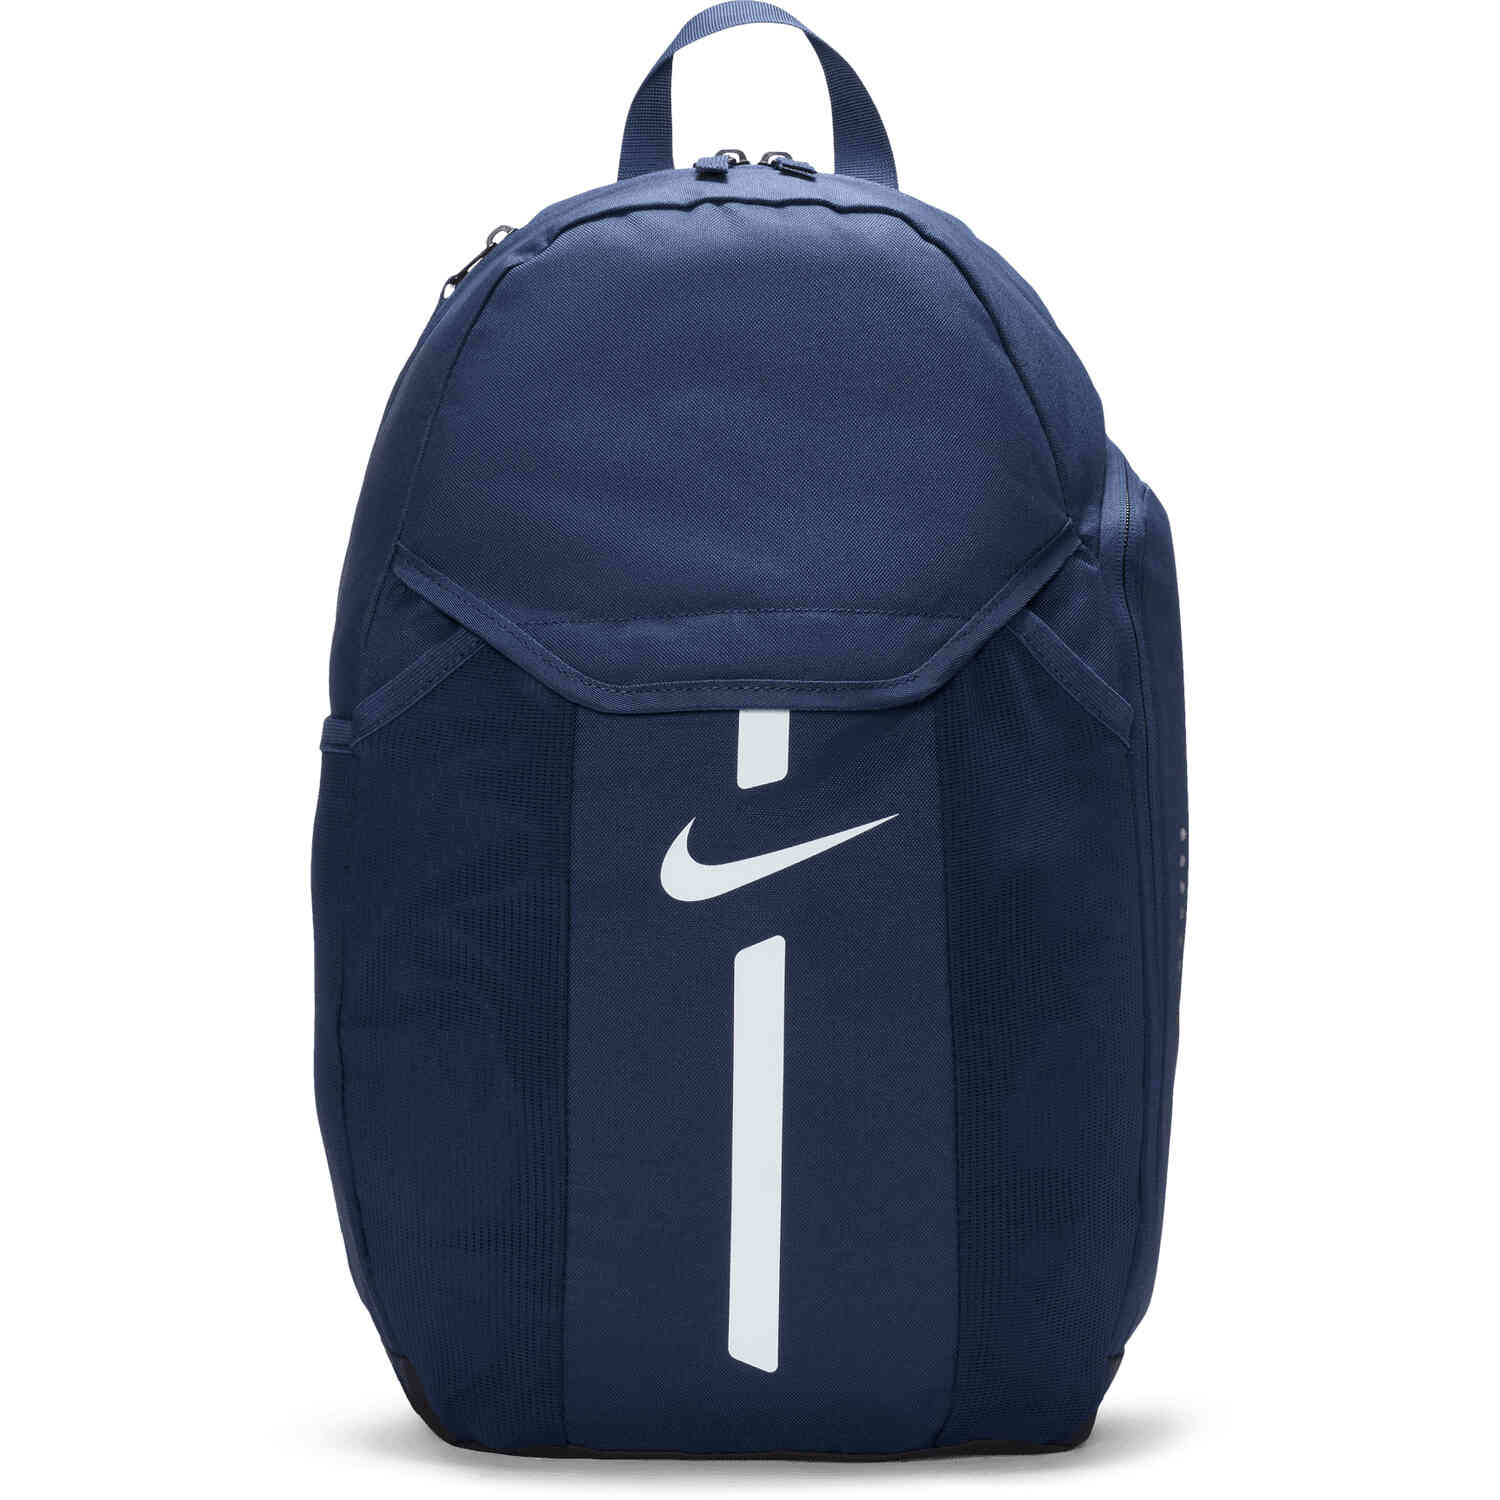 Nike Academy Backpack - Midnight Navy - SoccerPro